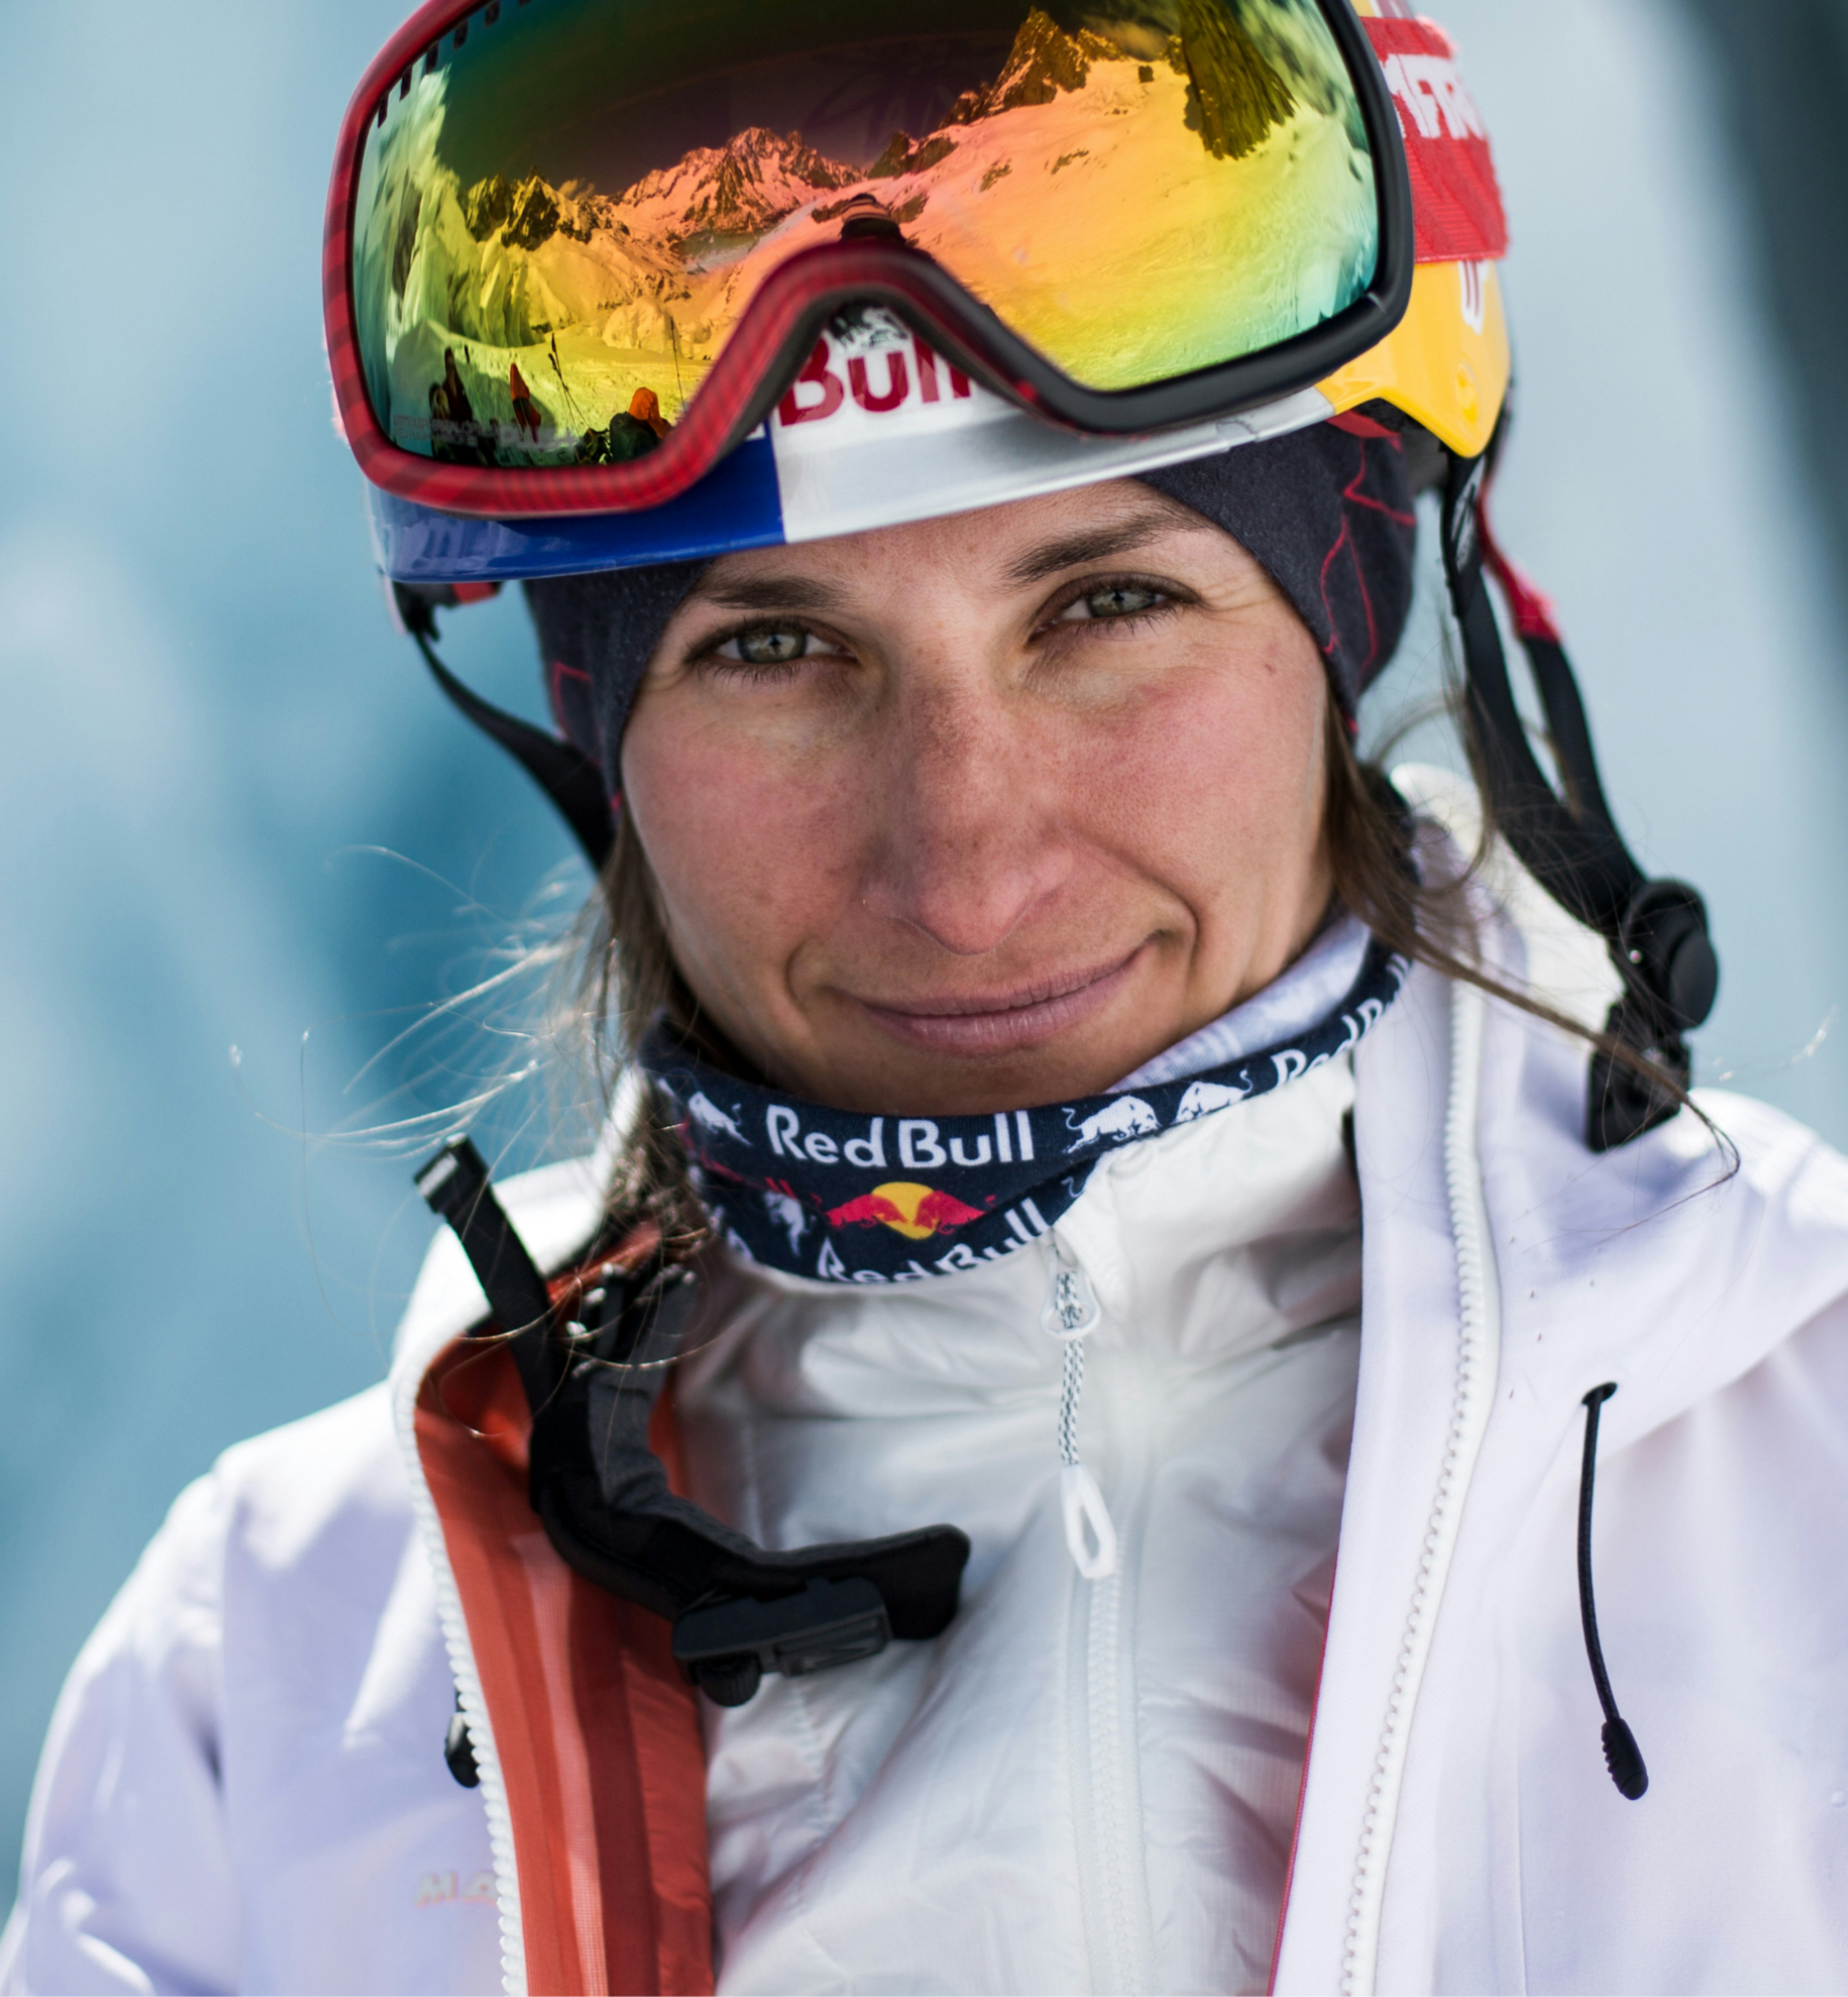 Nadine Wallner skie avec l'équipement Mammut